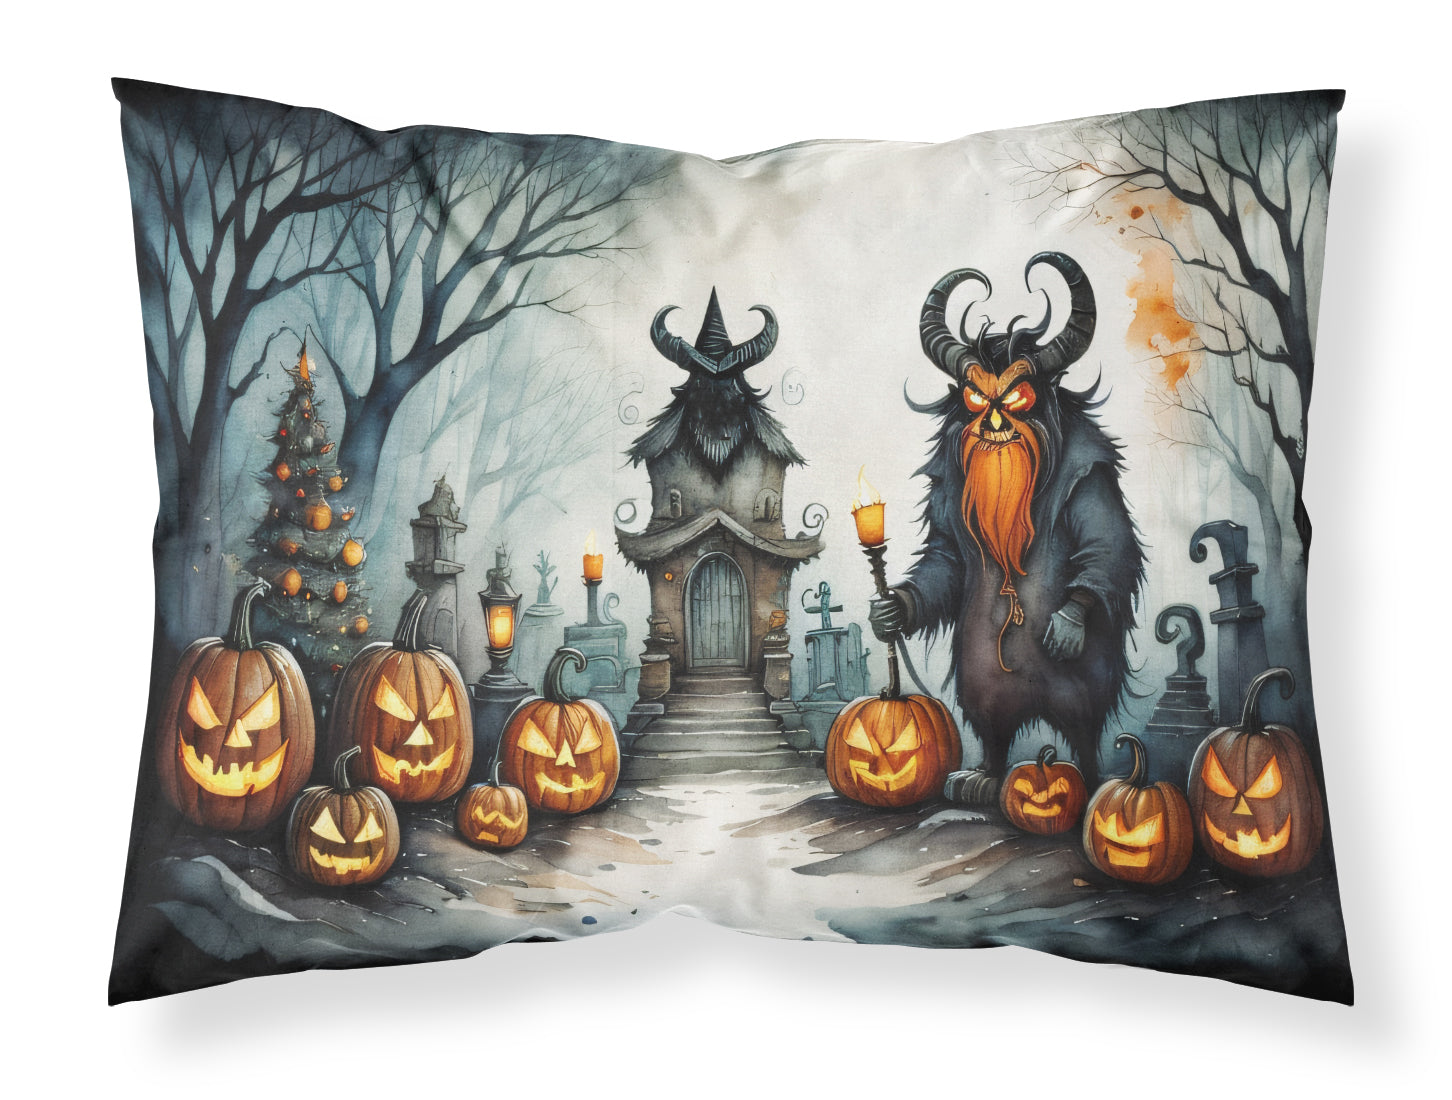 Buy this Krampus The Christmas Demon Spooky Halloween Fabric Standard Pillowcase